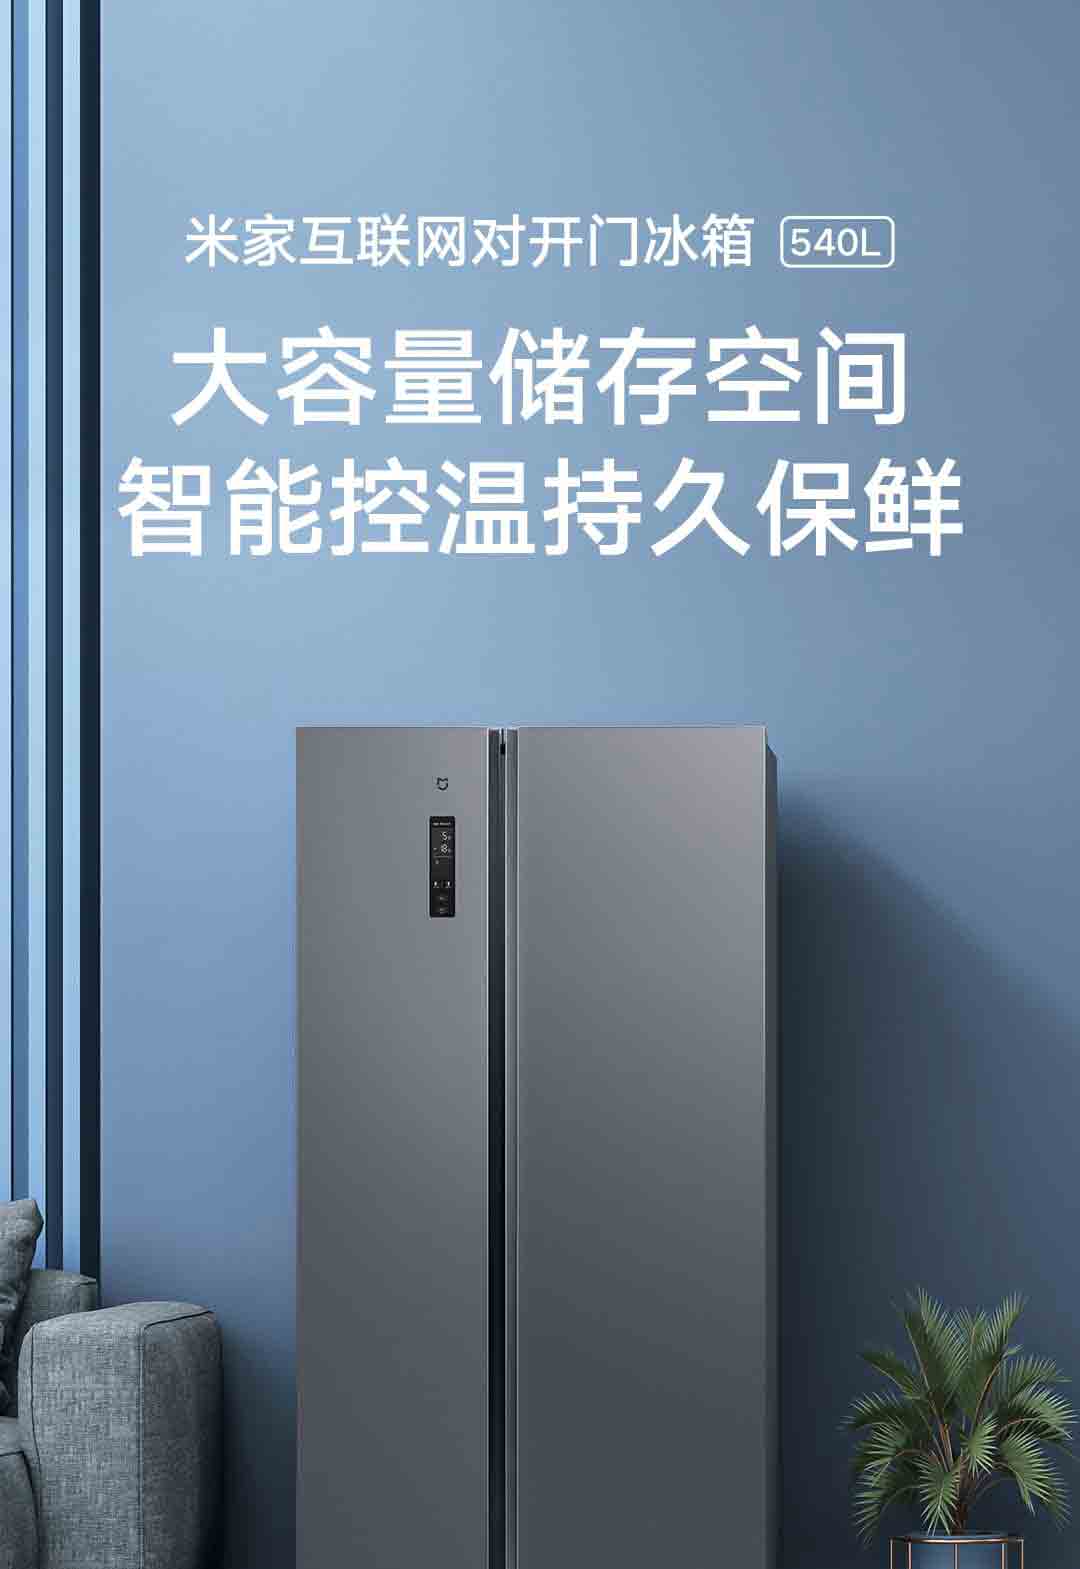 XIaomi MIJIA Refrigerator 